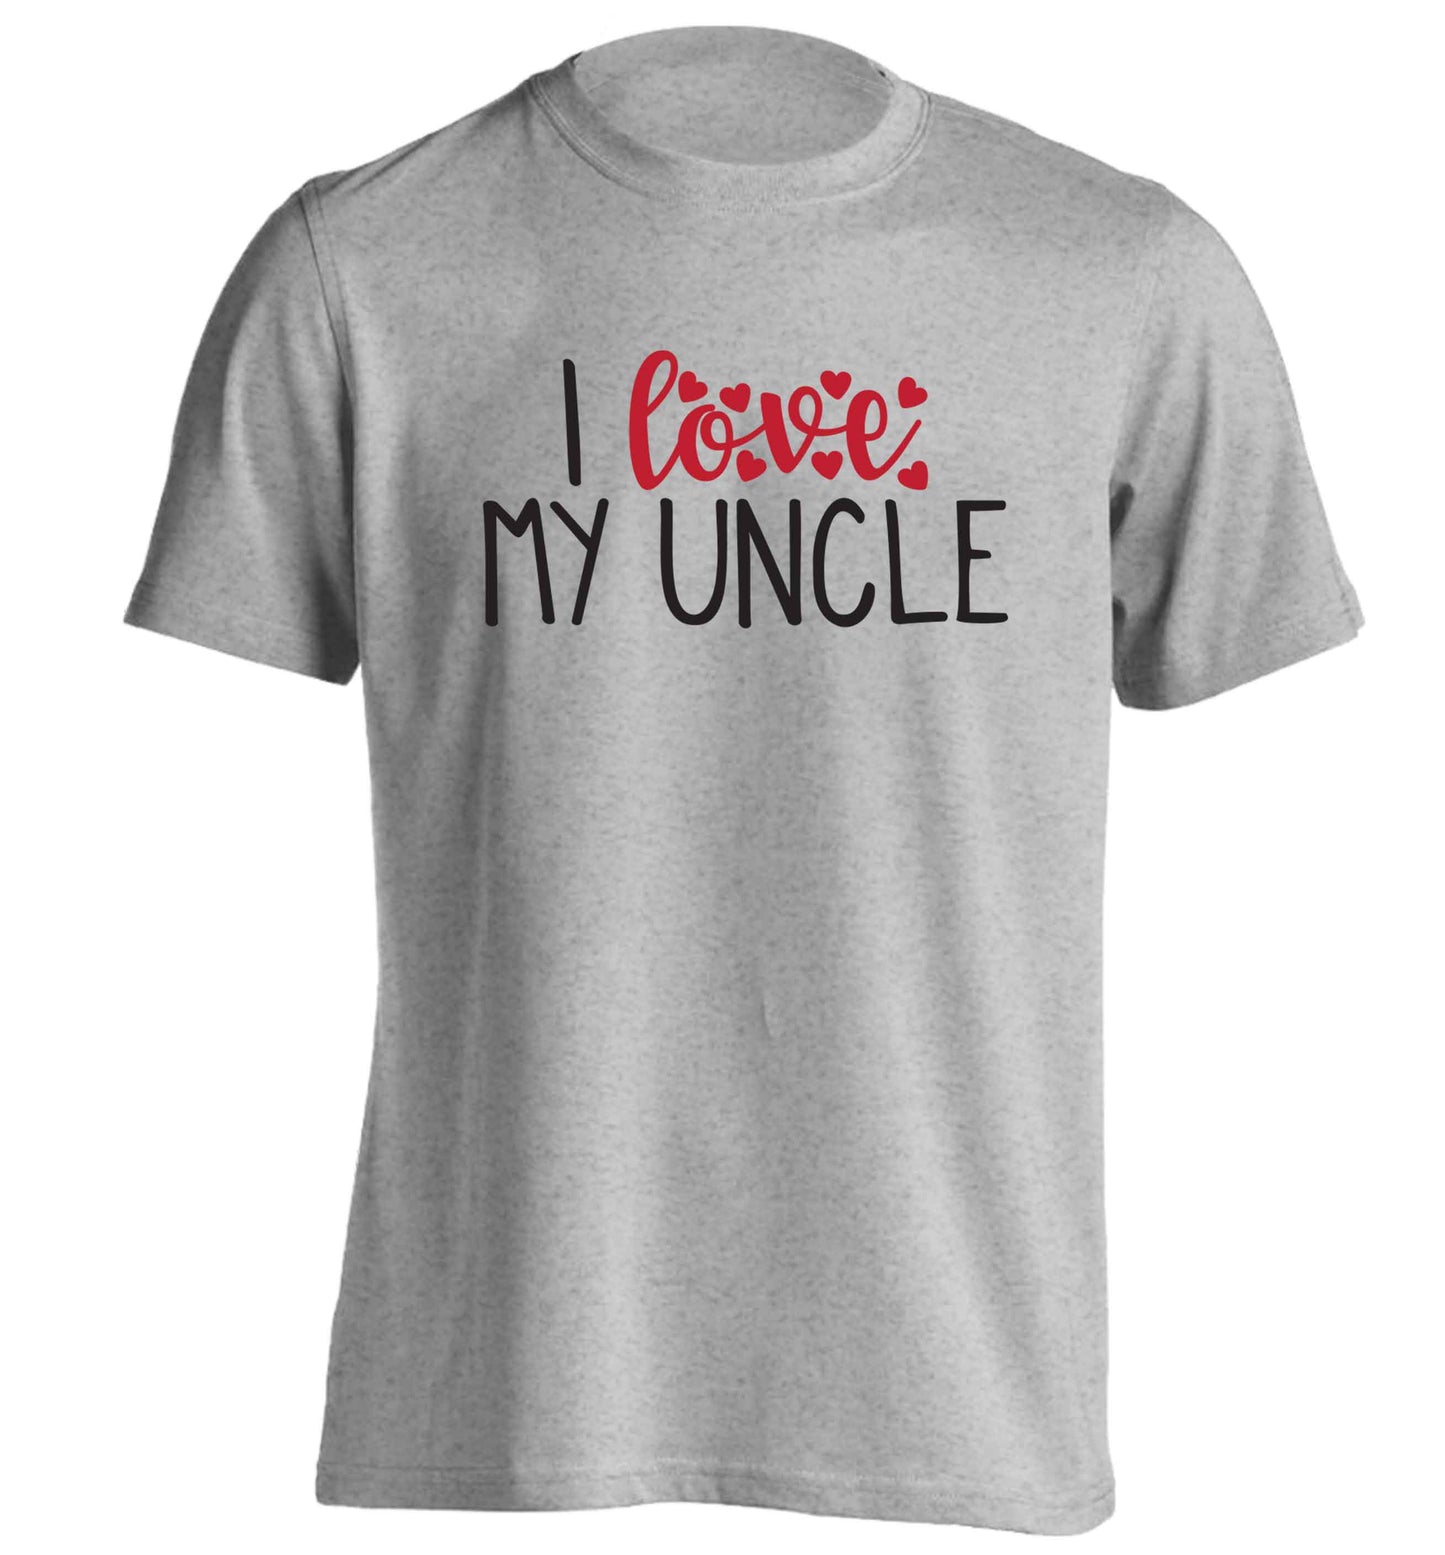 I love my uncle adults unisex grey Tshirt 2XL